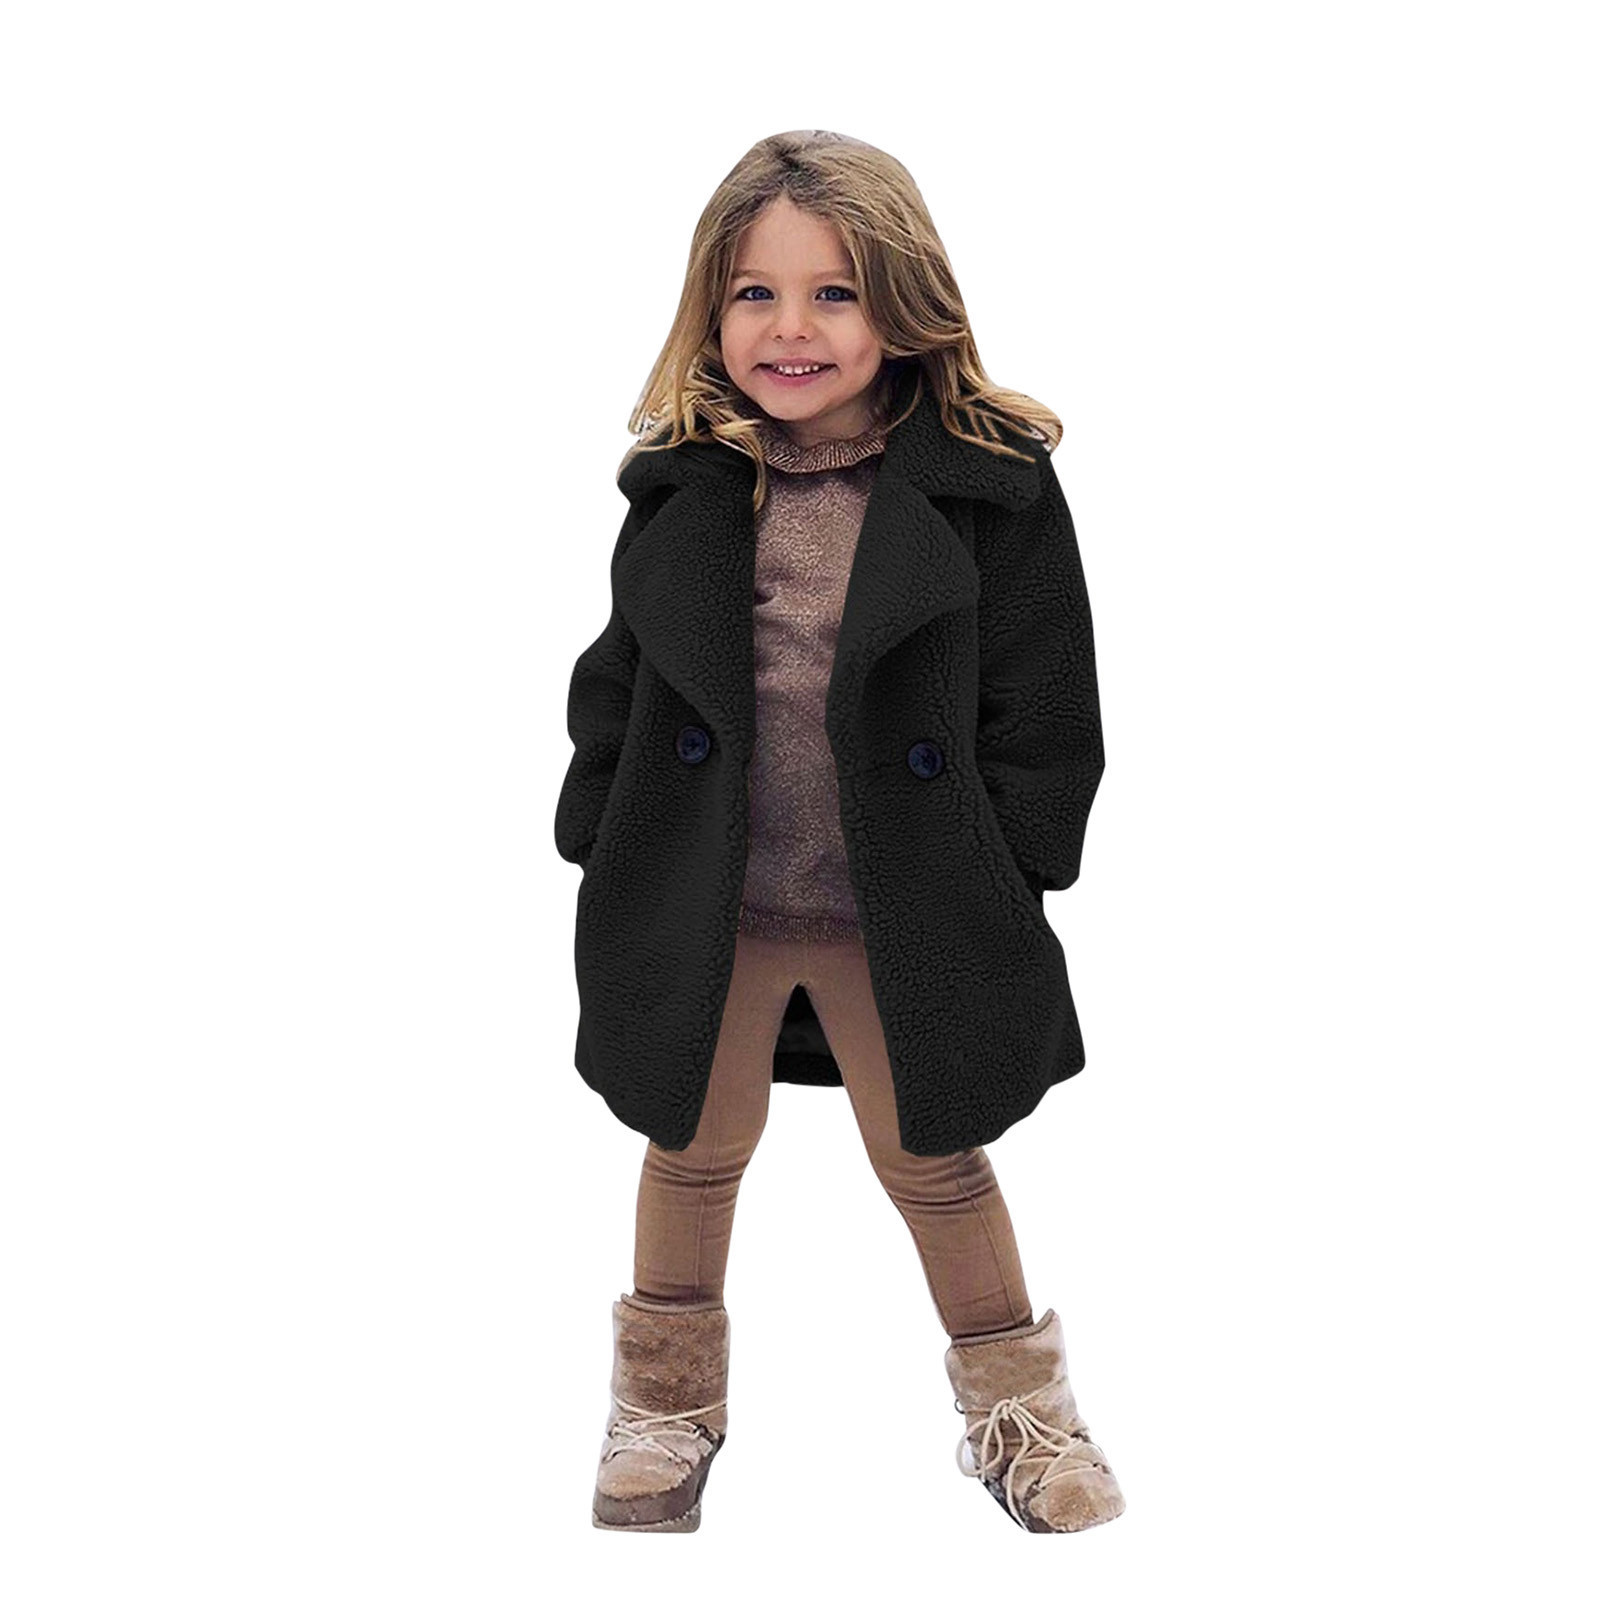 Outerwear Windproof Toddler Coat Jacket Girls Thicken Kids Warm Winter Baby Girls Coat&jacket Star Apparel - image 1 of 9